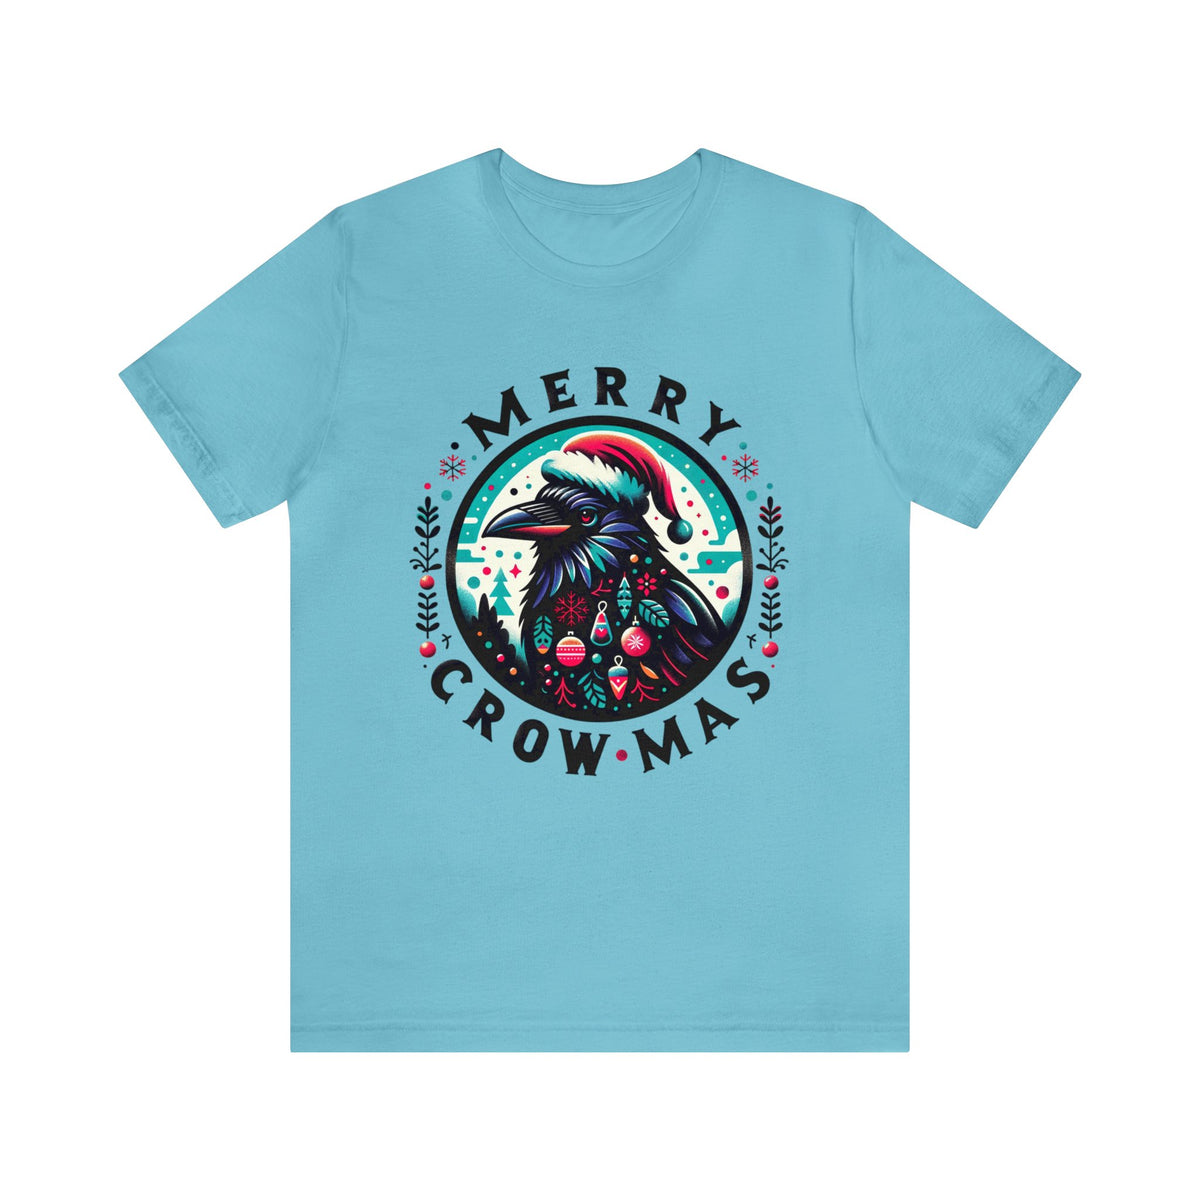 Merry Crow-mas Crow Christmas Shirt | Crow Animal Lover Gift | Christmas Crow | Unisex Jersey T-shirt